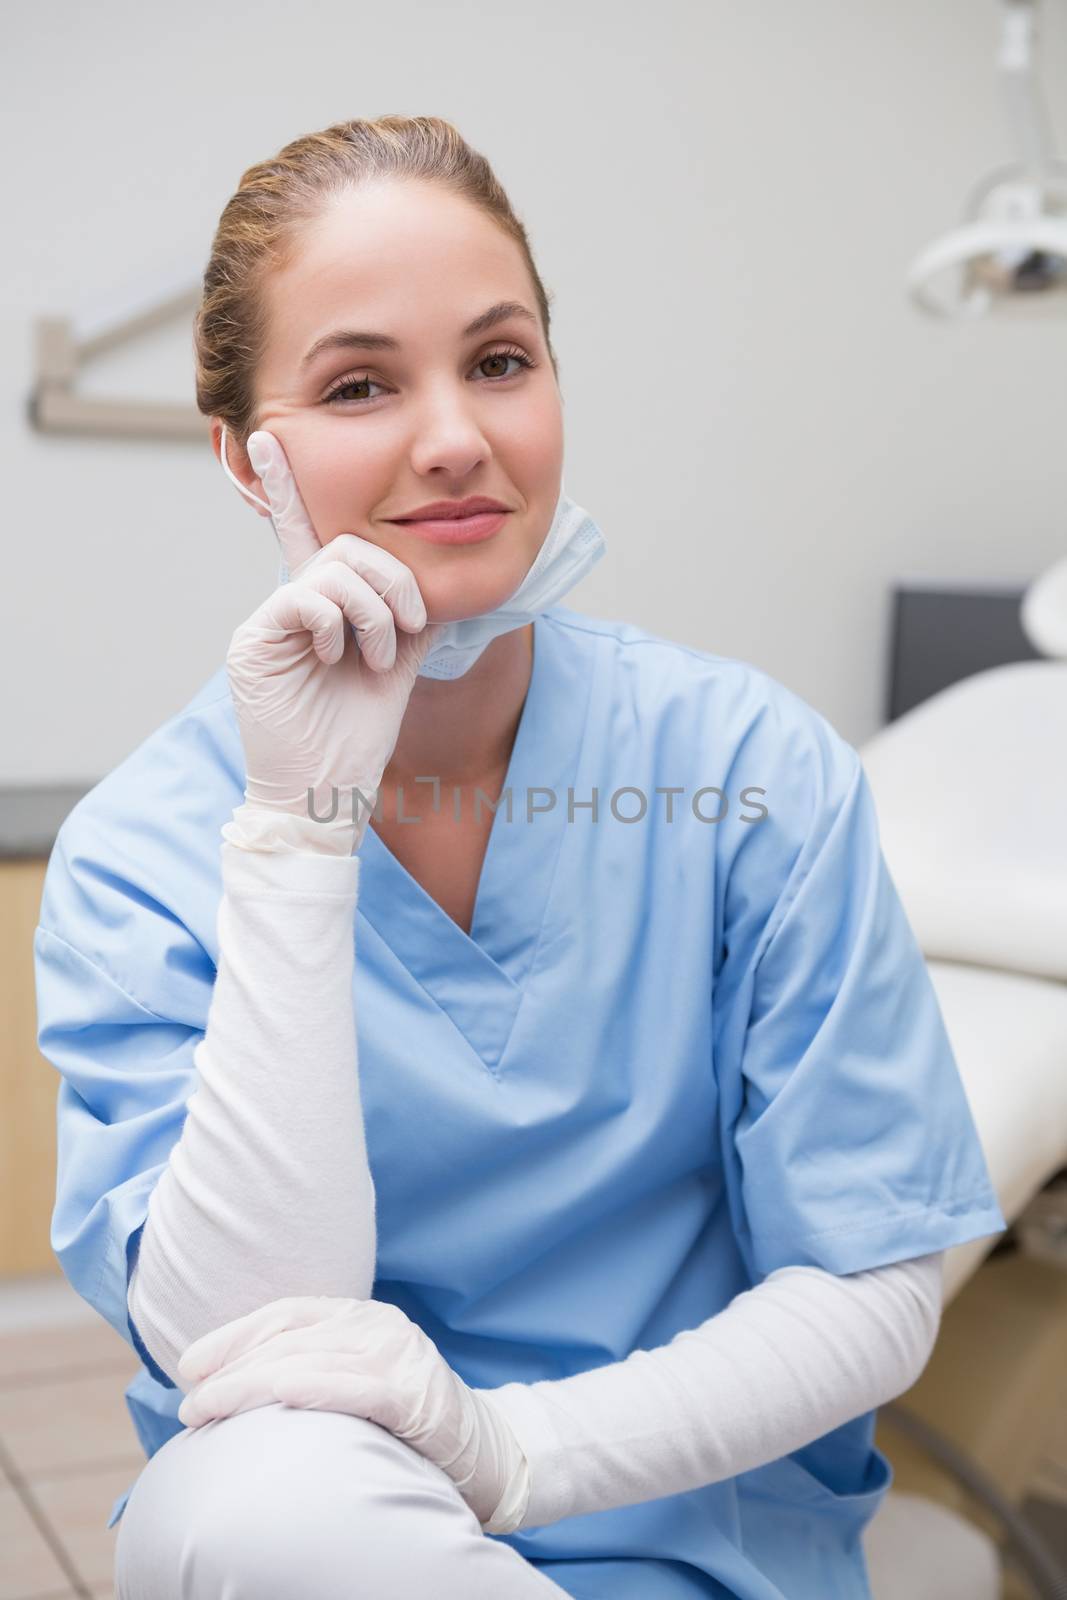 Dentist in blue scrubs smiling at camera by Wavebreakmedia